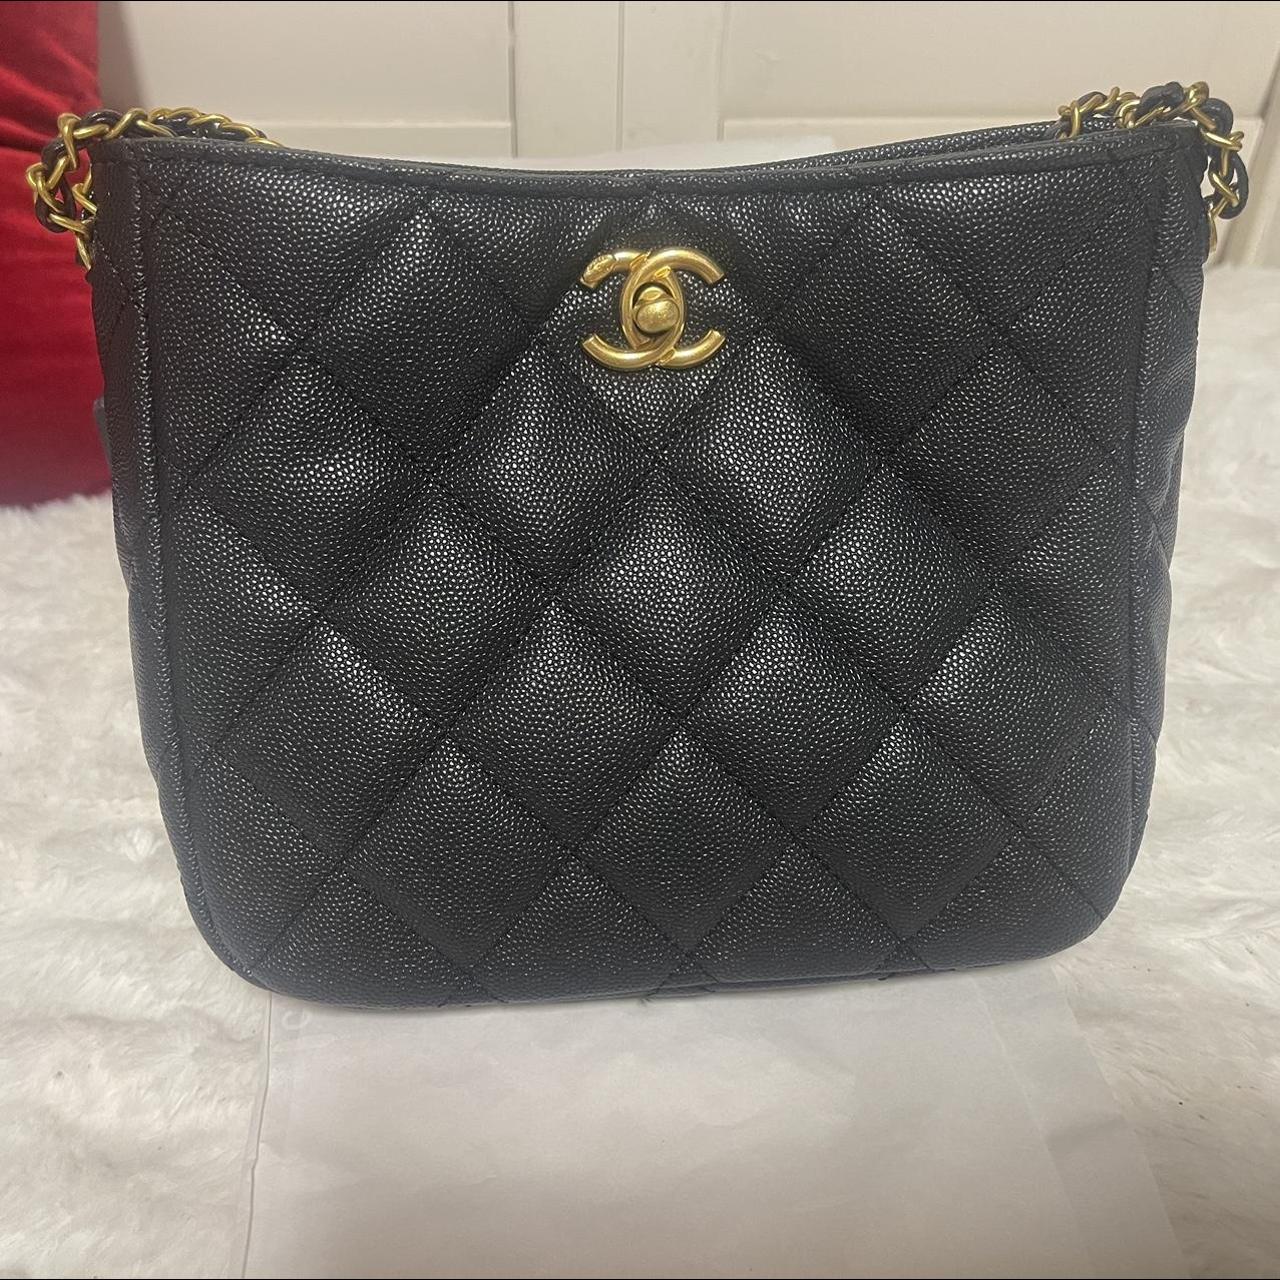 Chanel Duffle Bag - 25 For Sale on 1stDibs